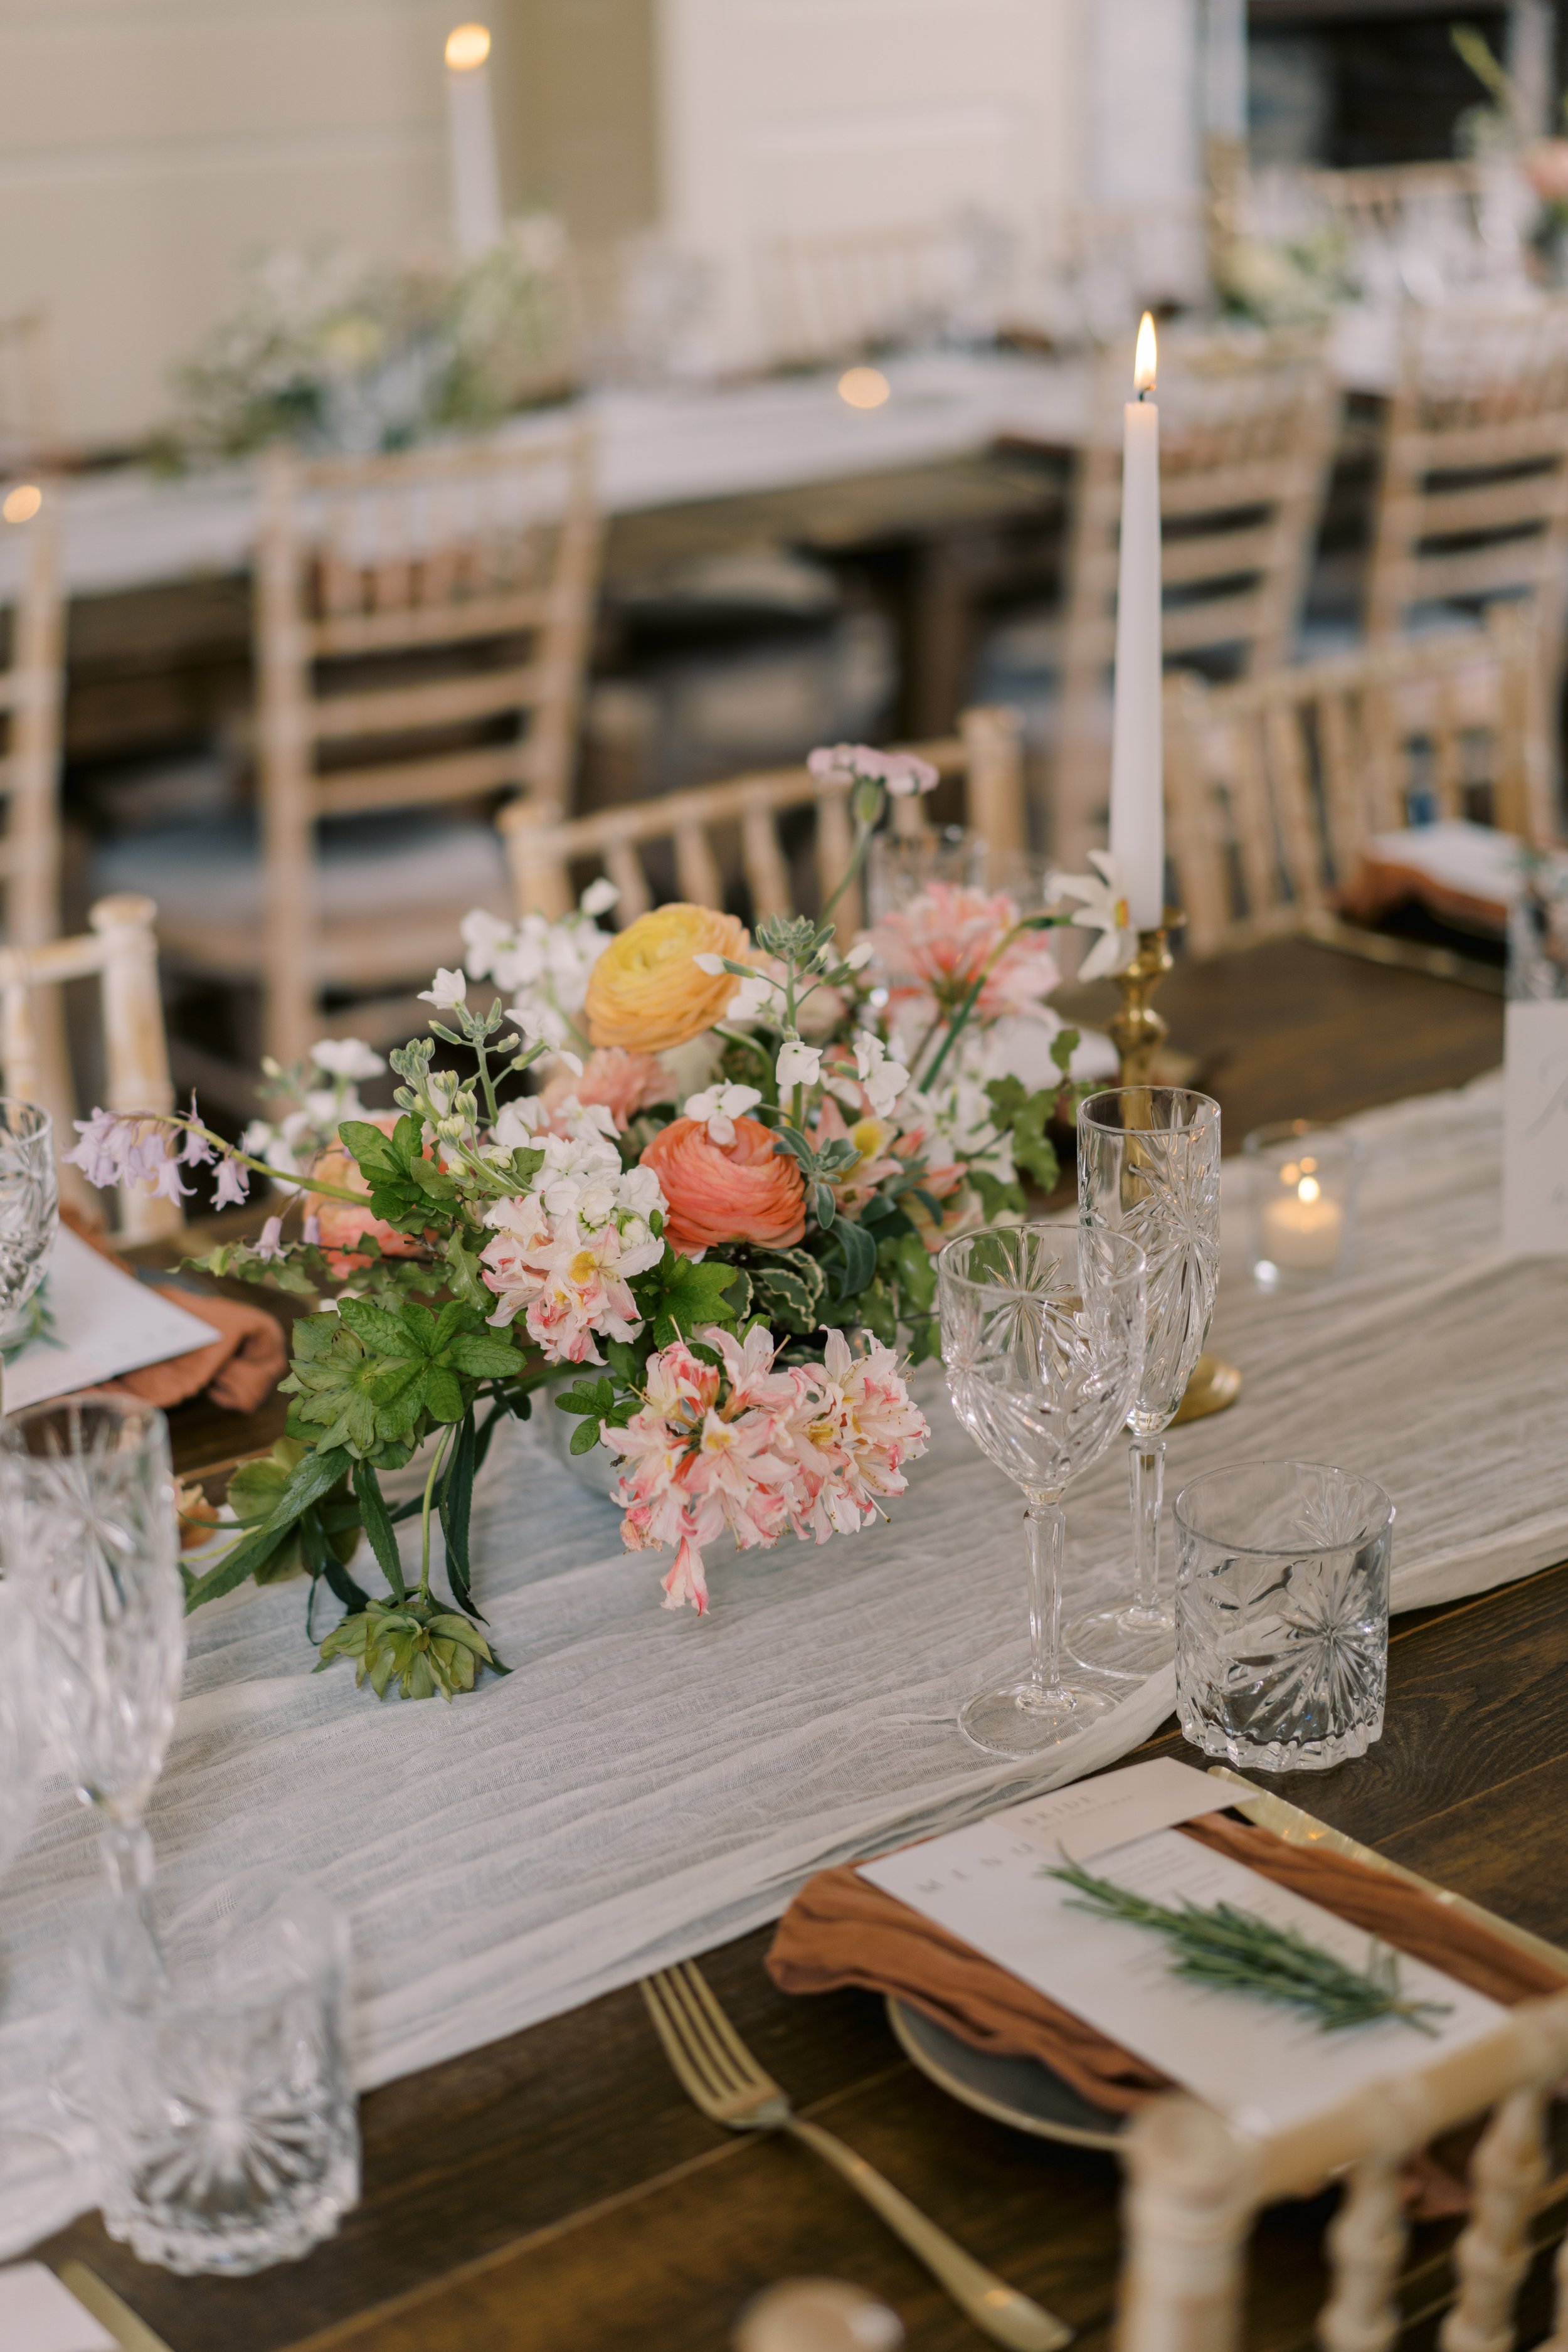 Natural table styling for seasonal wedding